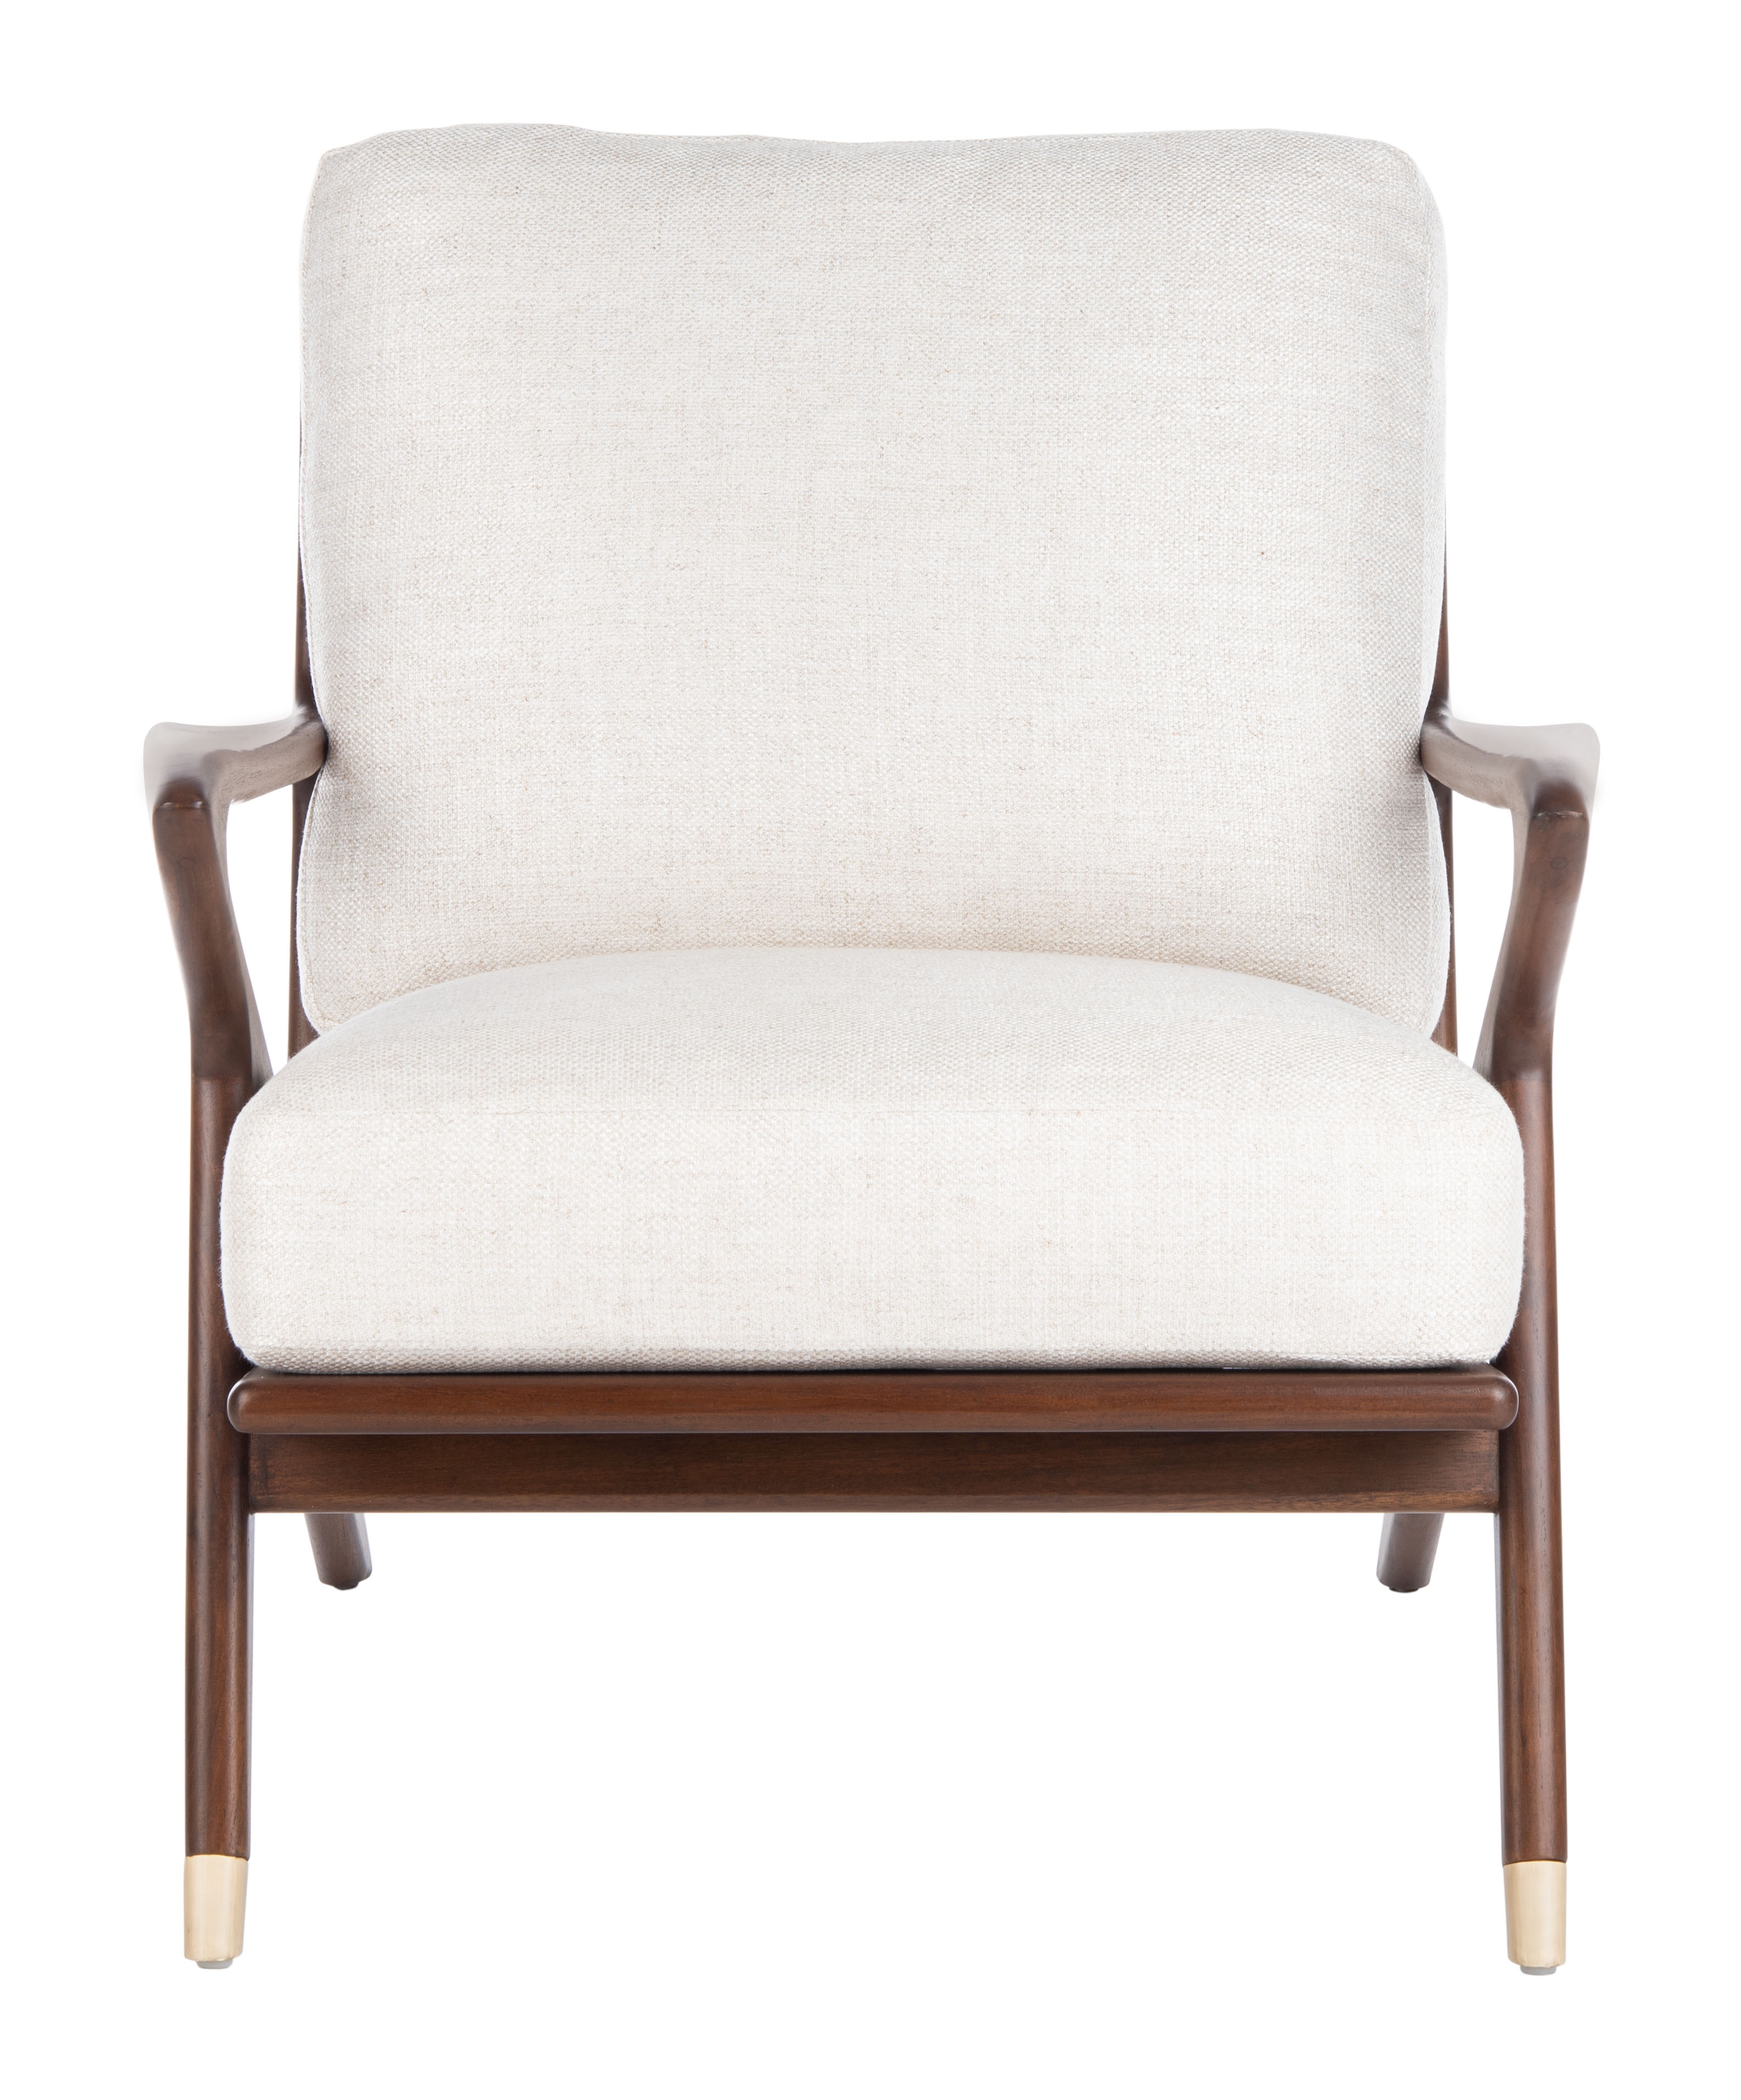 Killian Mid Century Accent Chair - Cream - Safavieh - Image 2